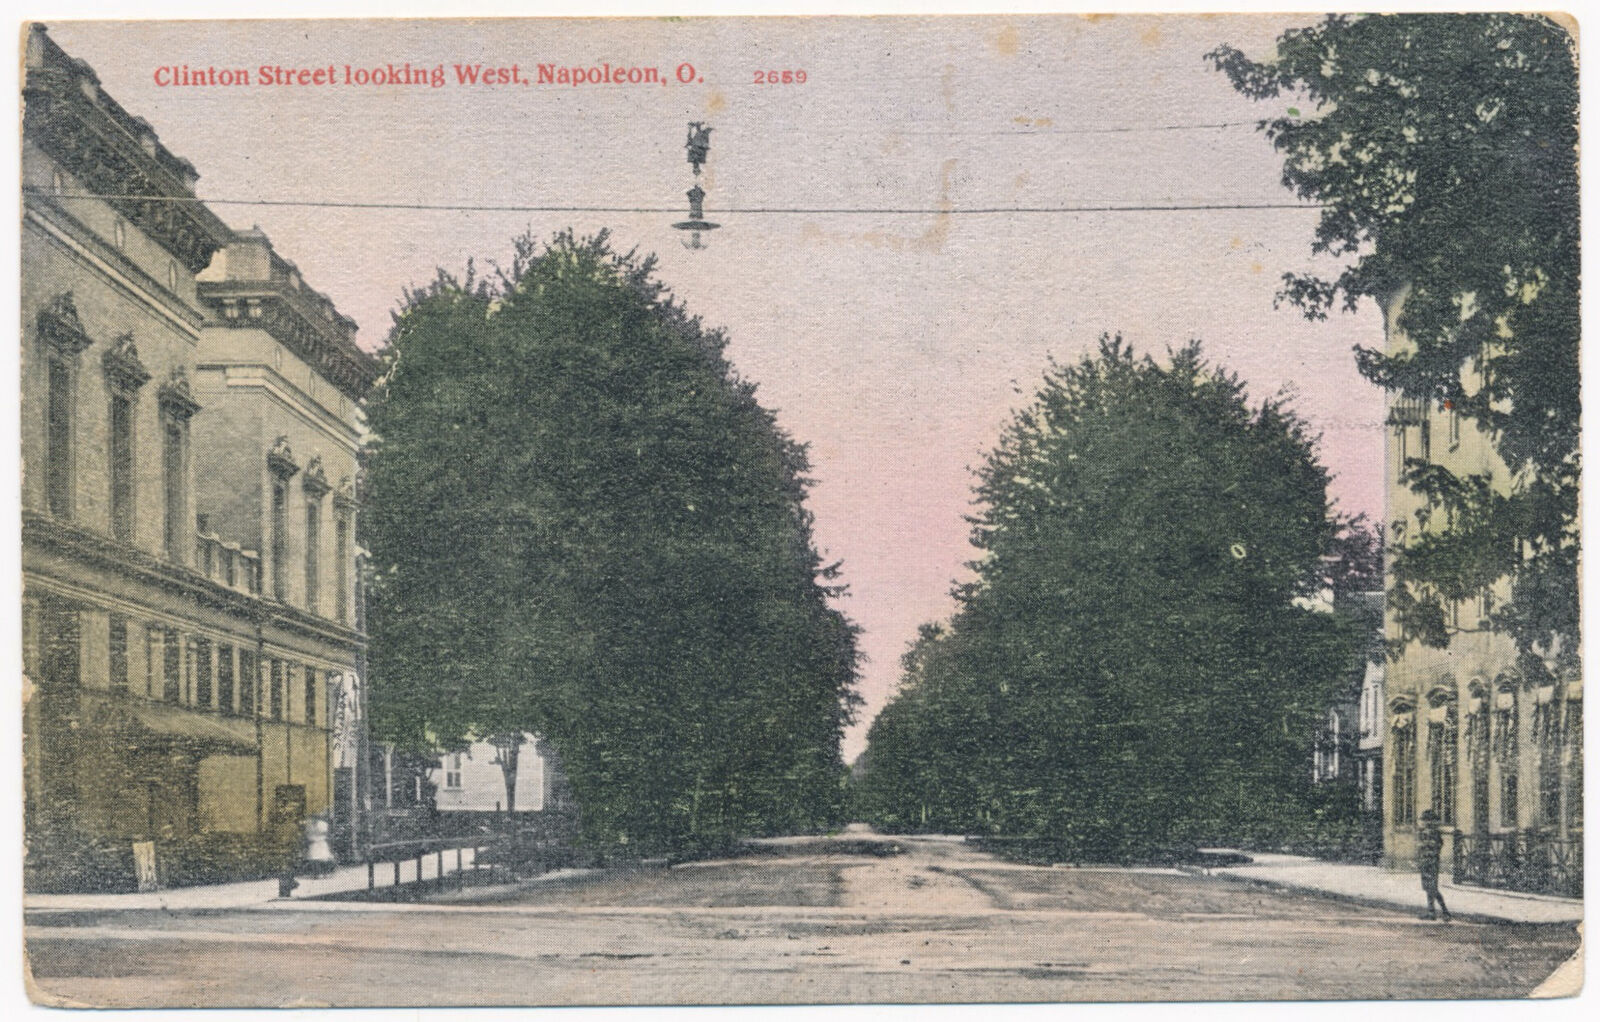 Clinton Street Looking West, Napoleon, Ohio 1909